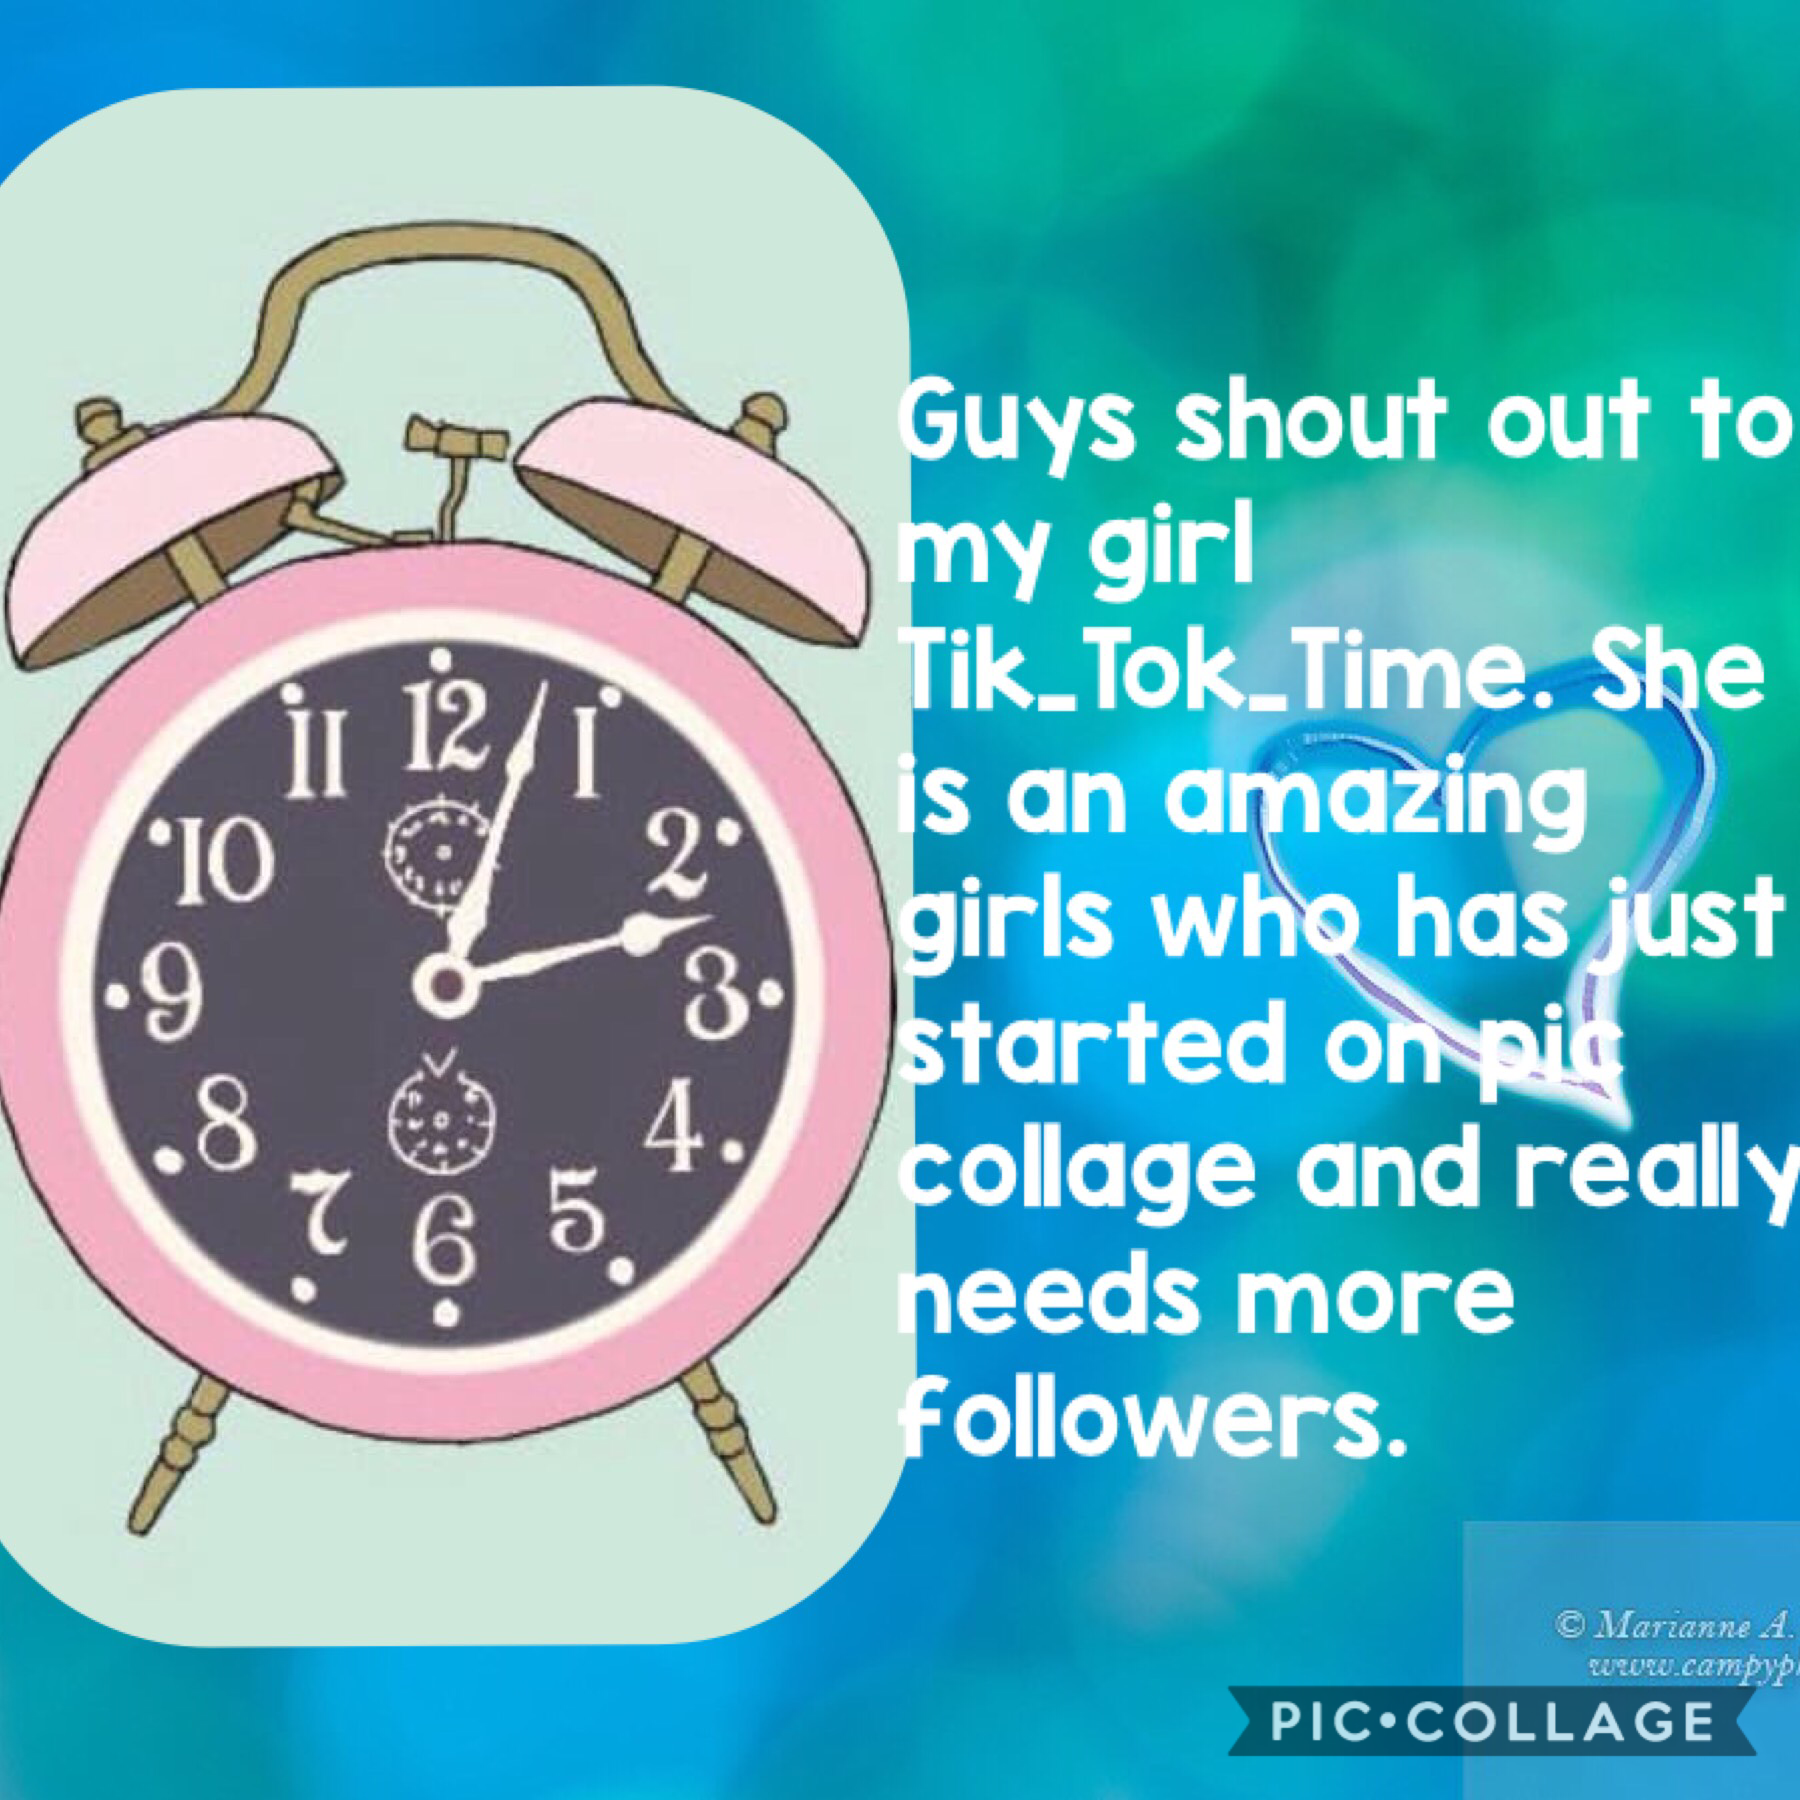 Please follow Tik_Tok_Time